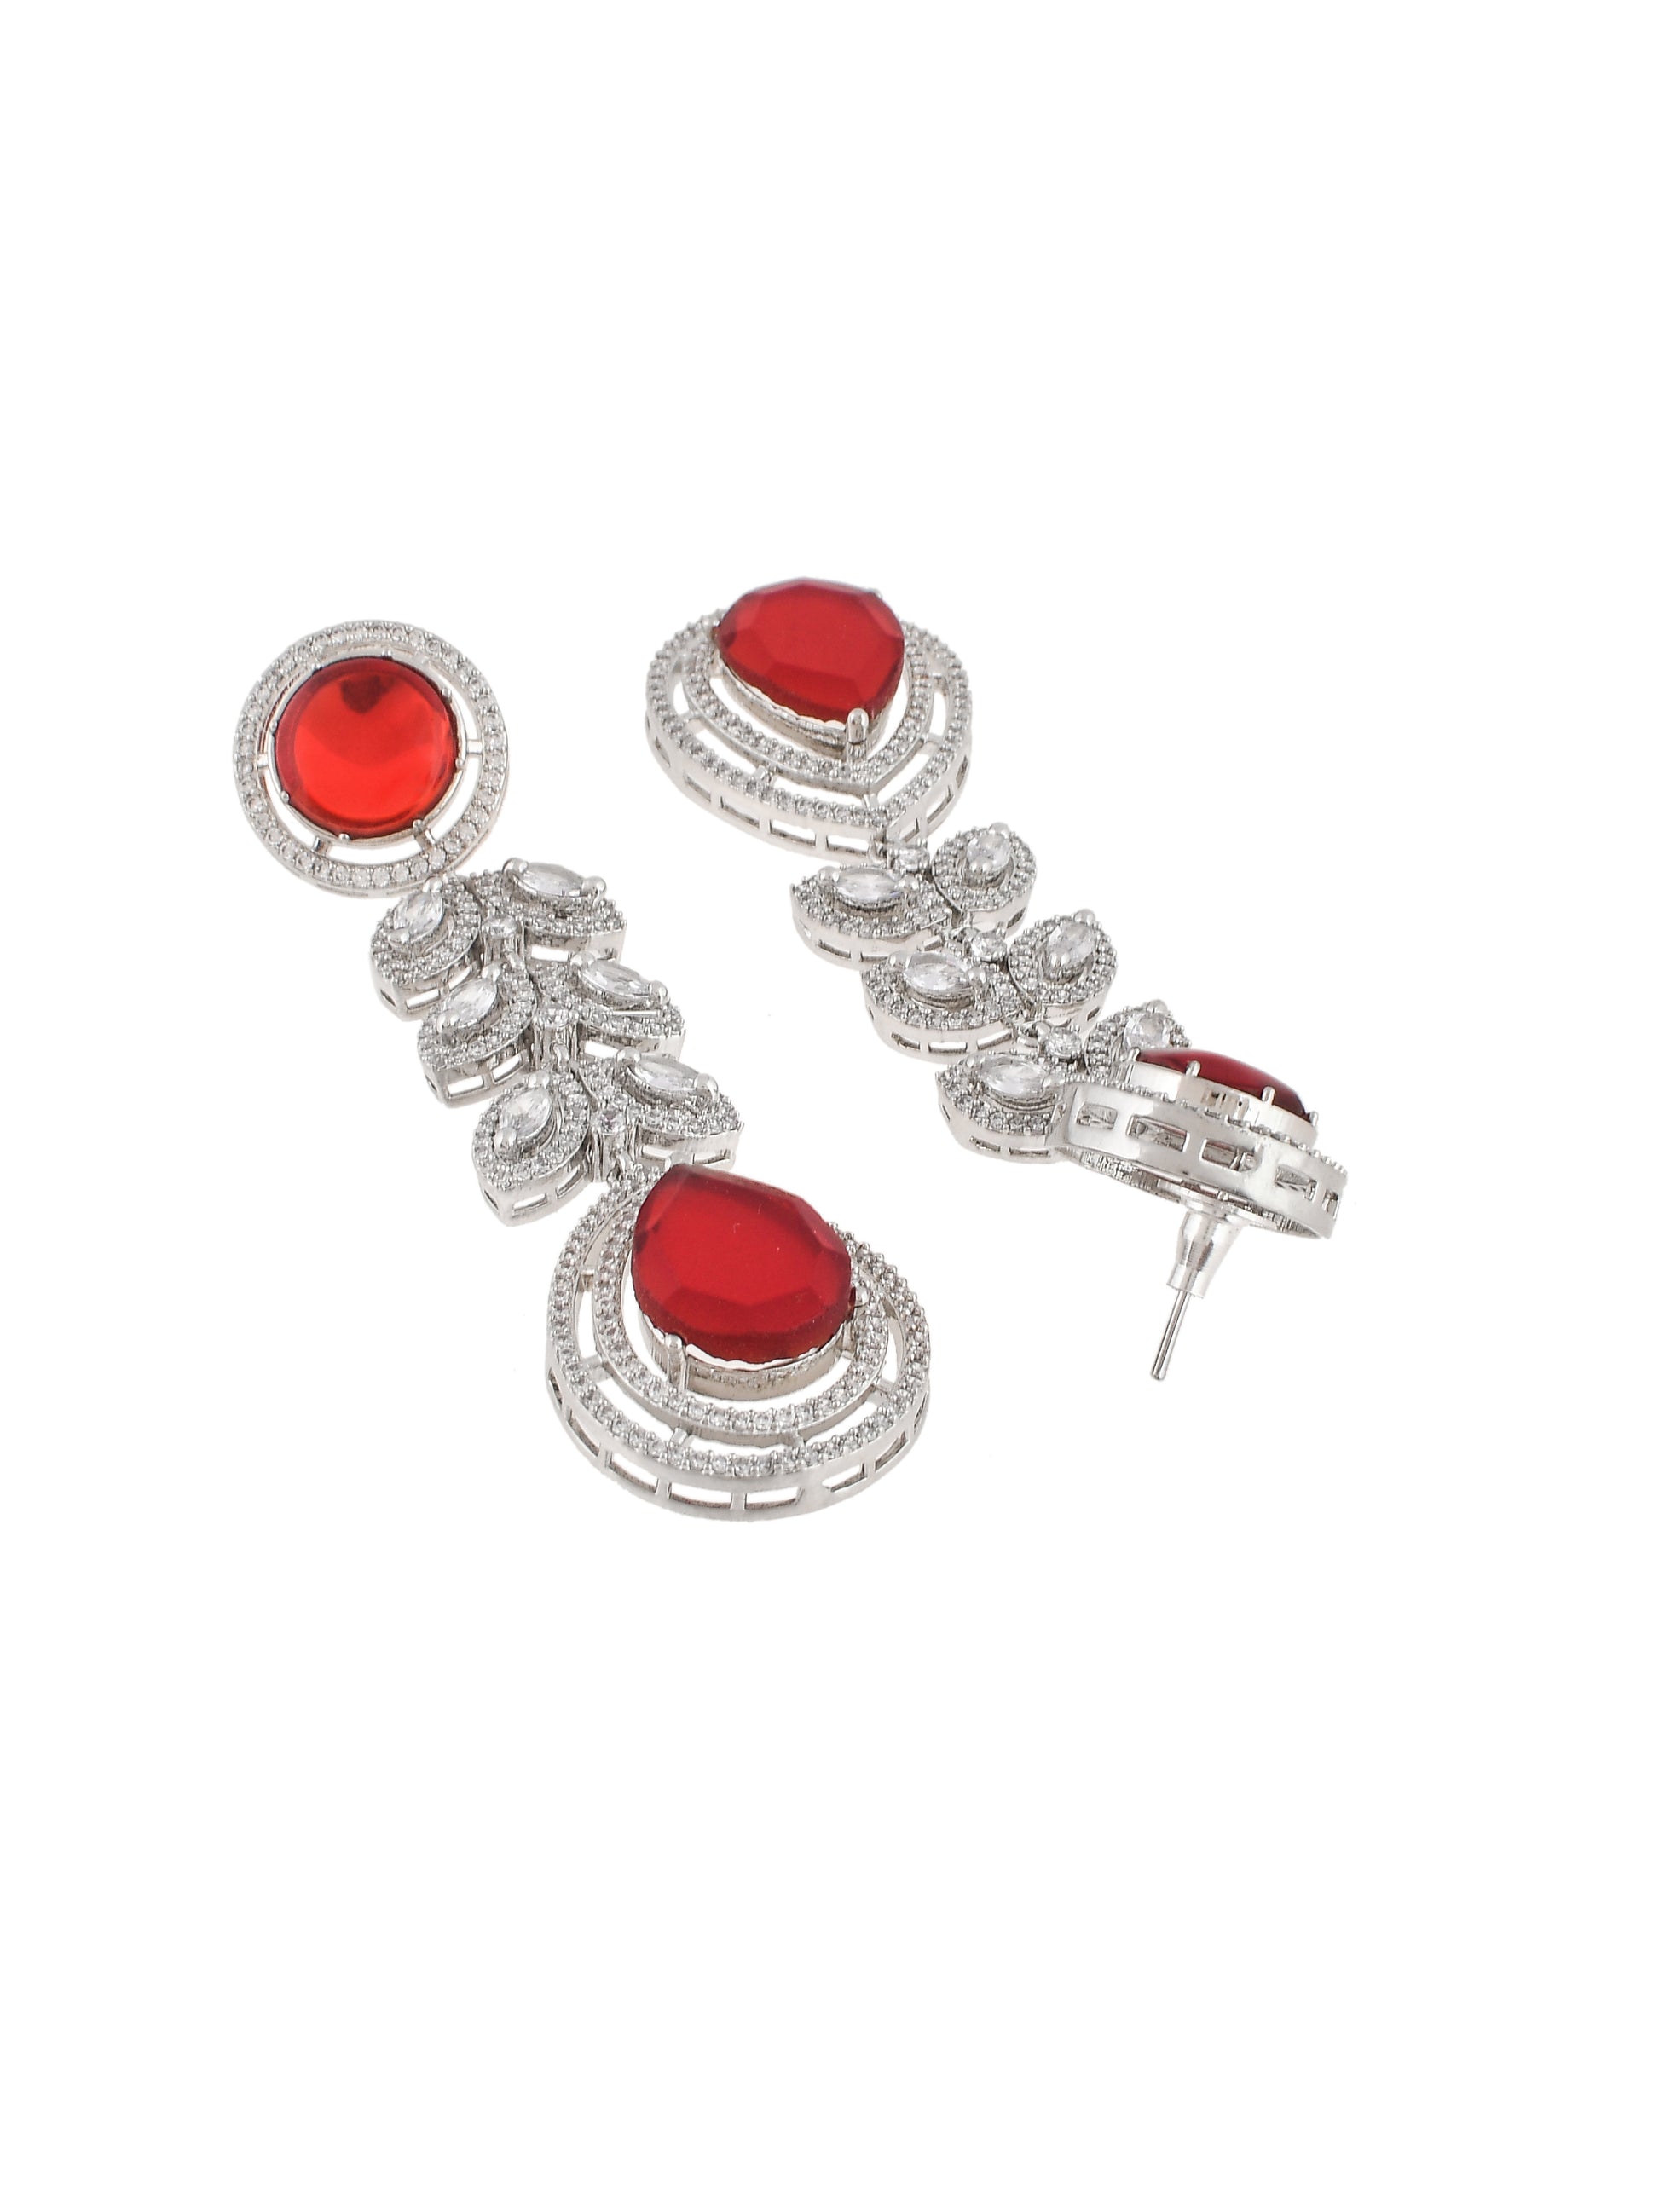 Red Stone American Diamond Jewellery set